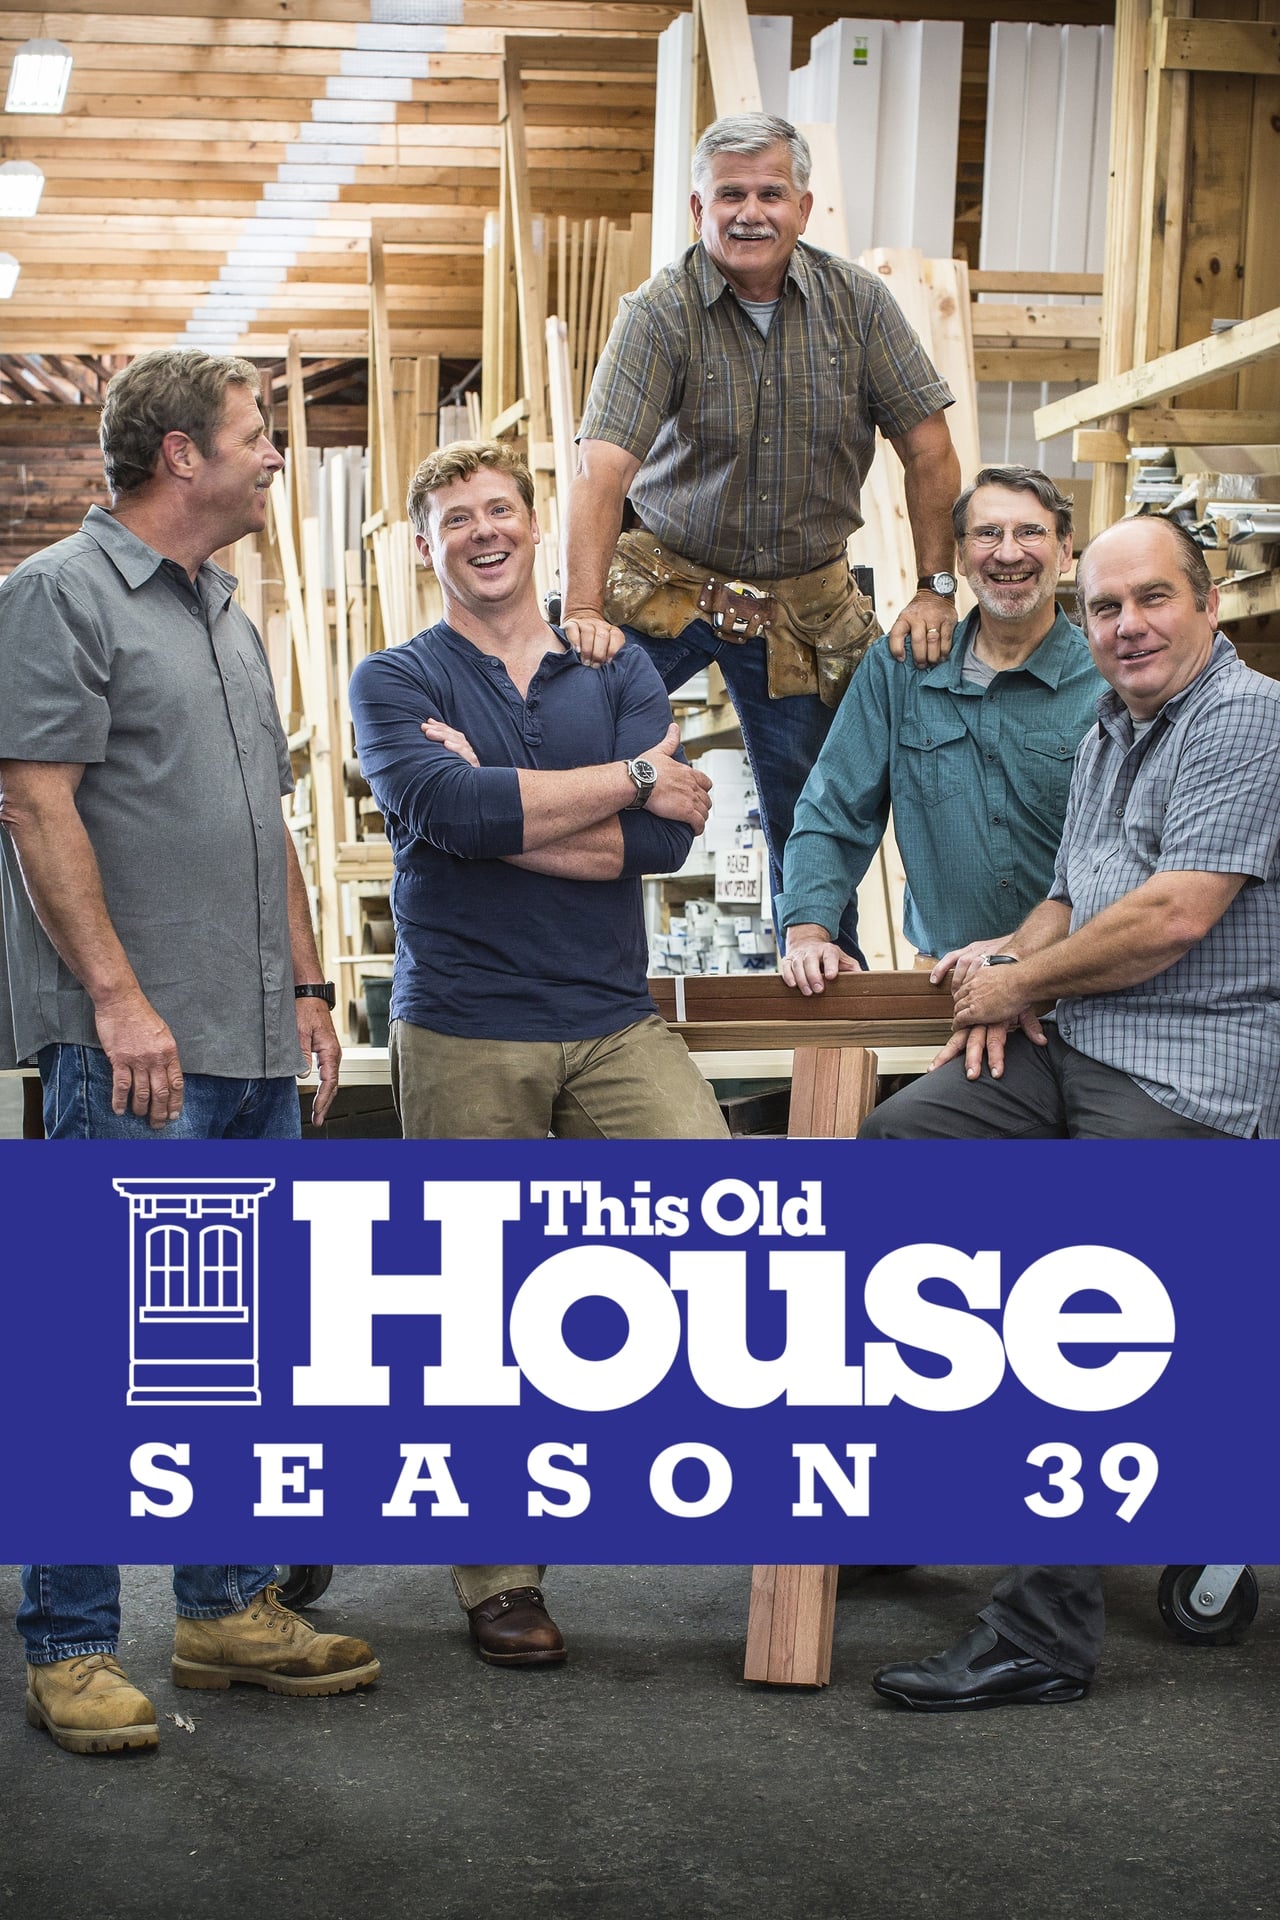 This Old House Season 39